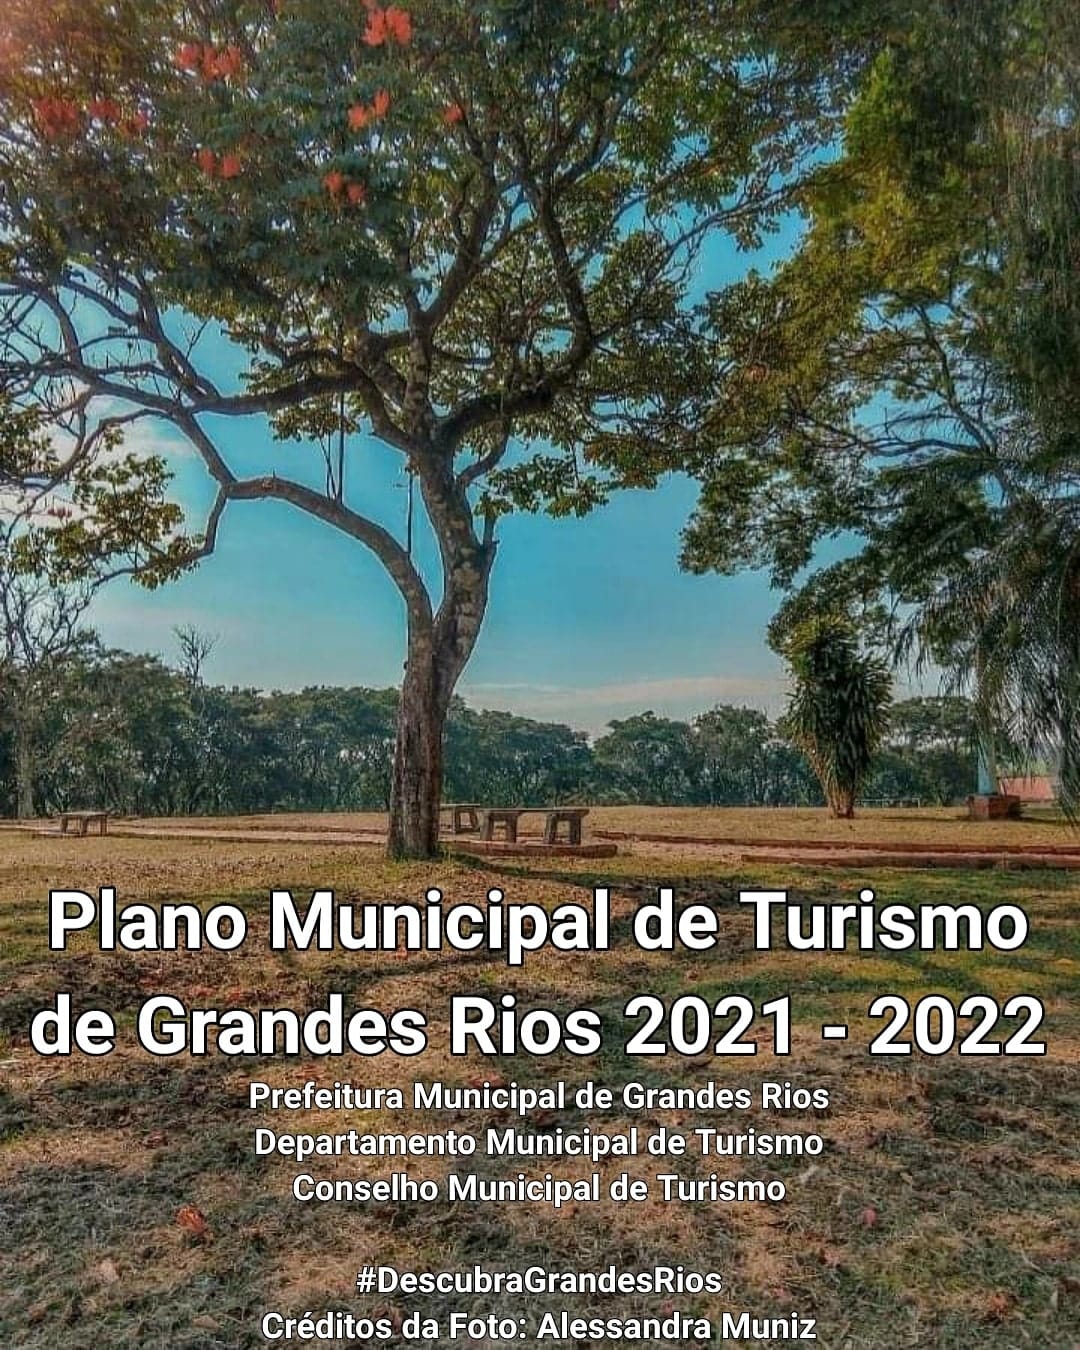 Plano Municipal de Turismo de Grandes Rios 2021 - 2022